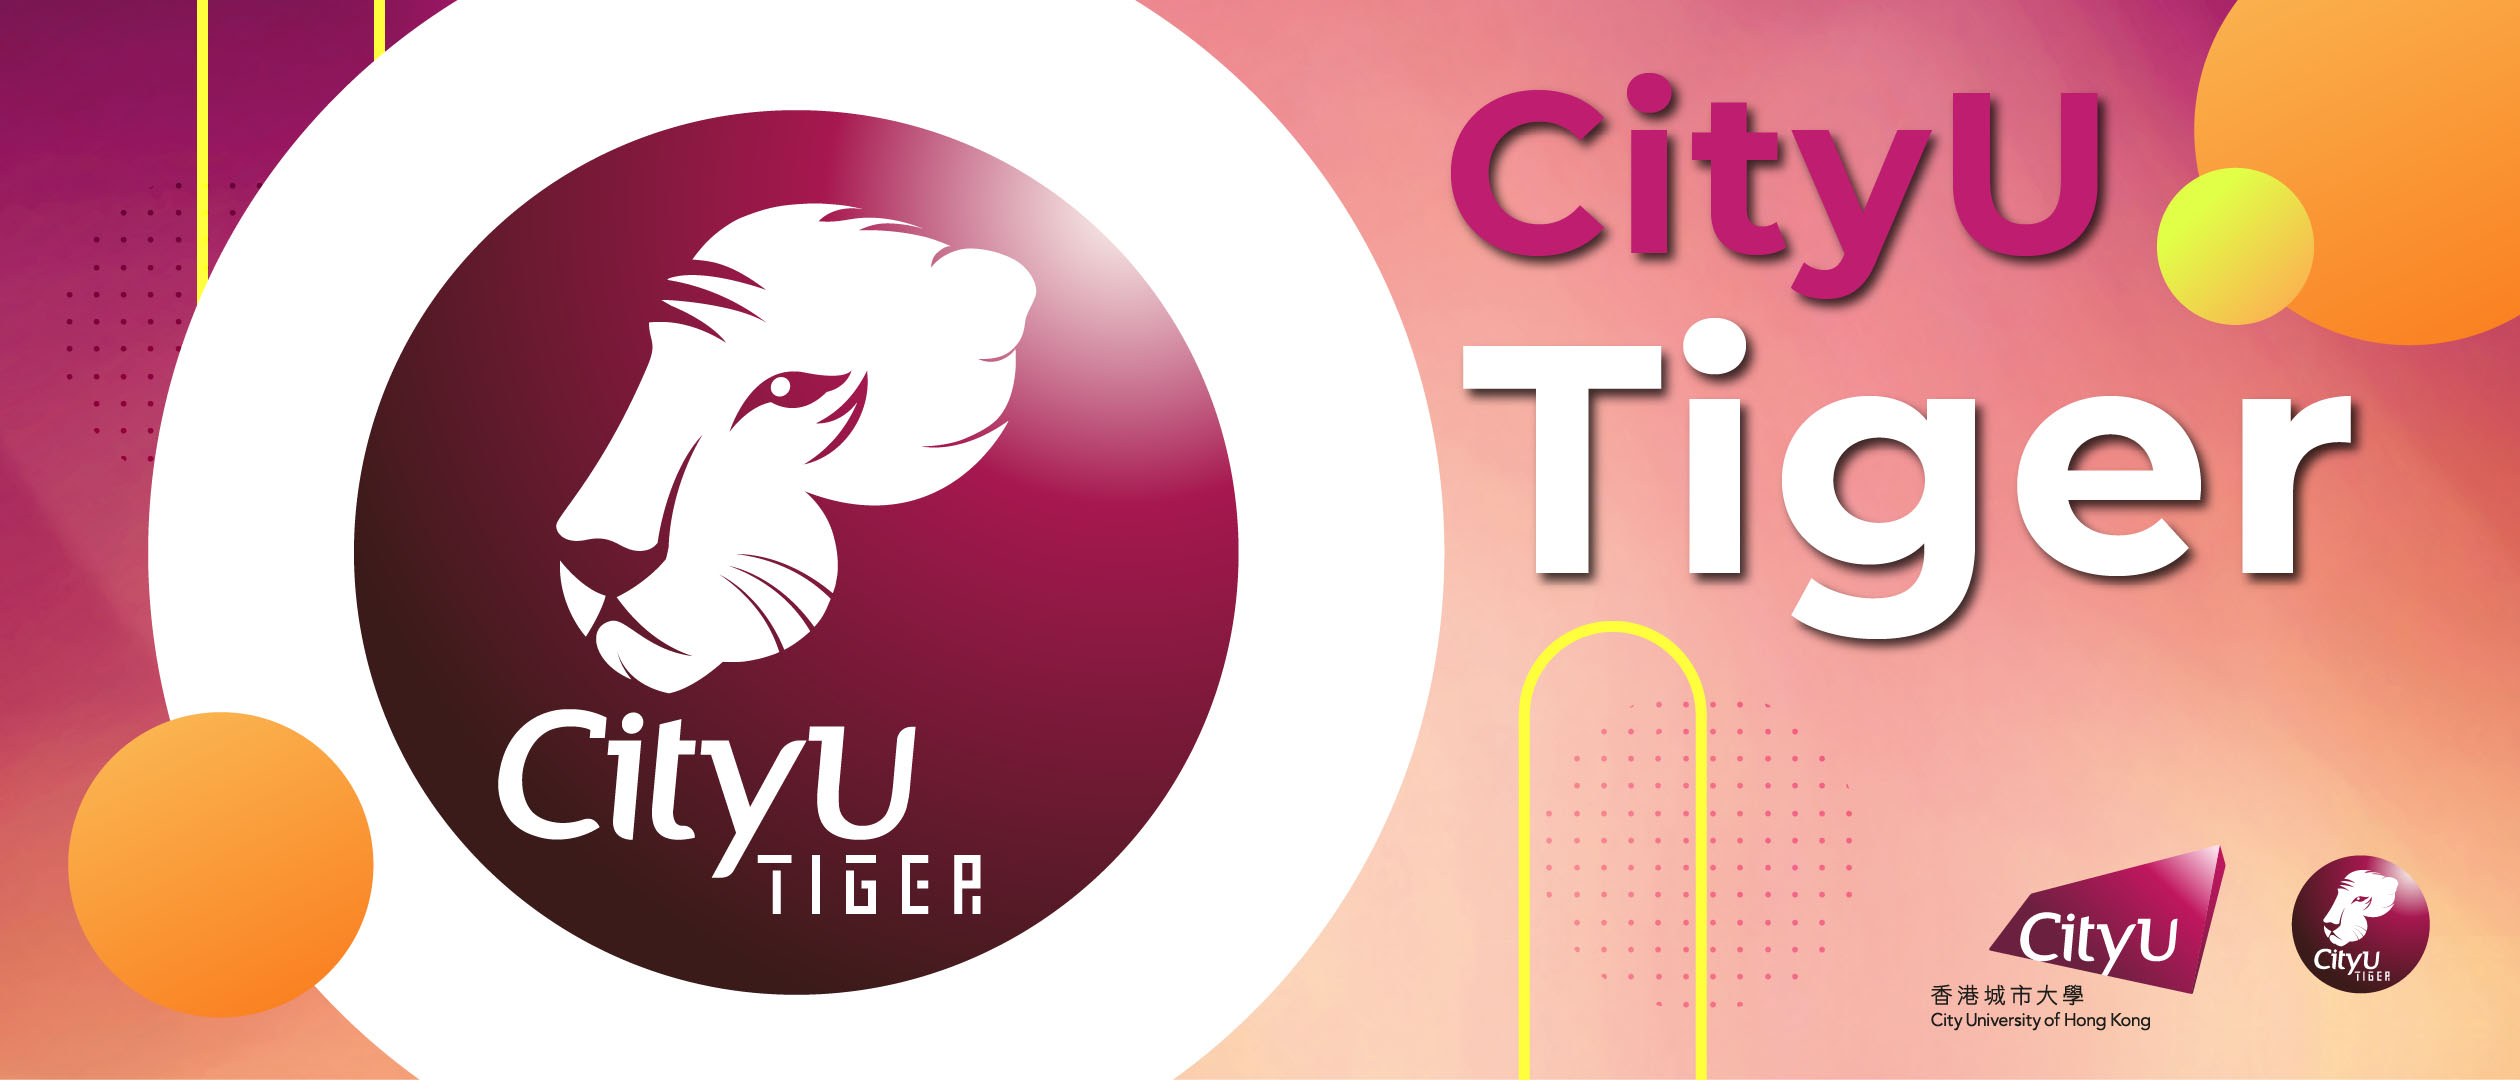 CityU Tiger 老虎班